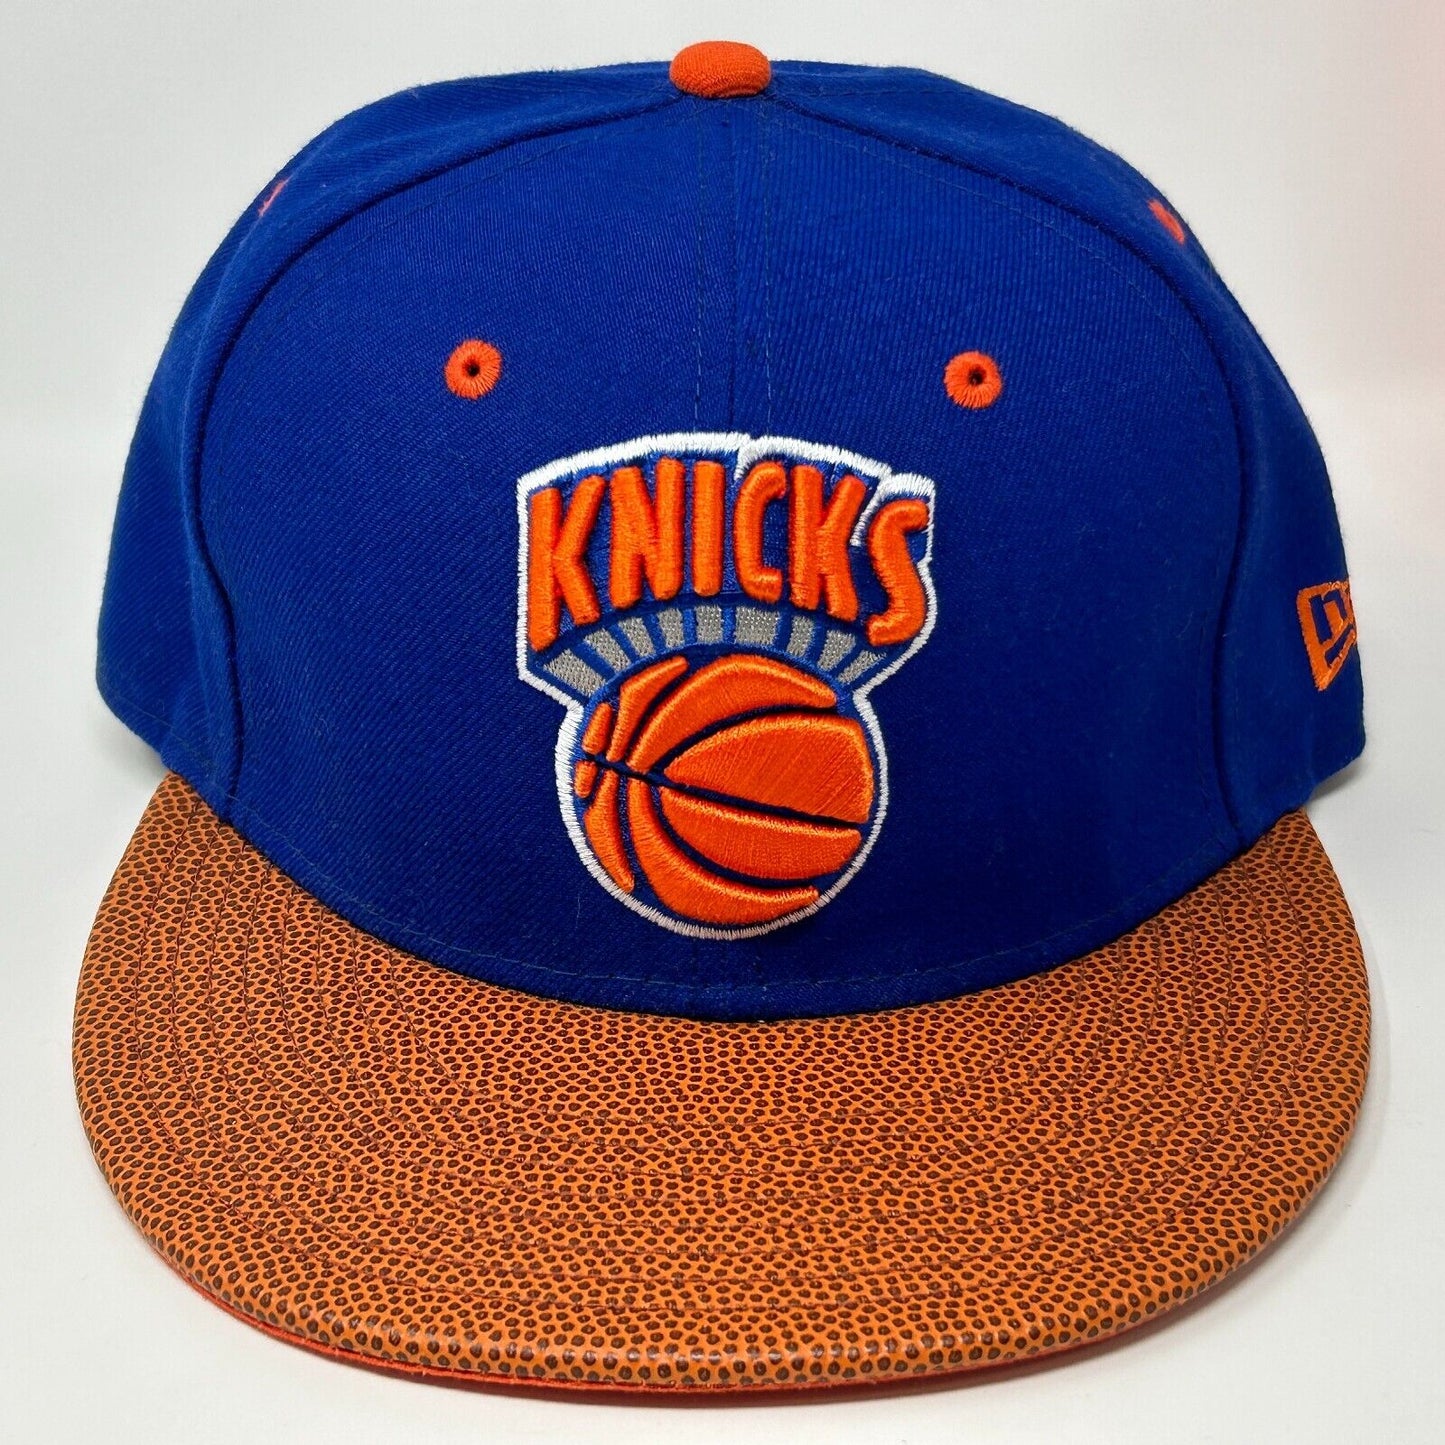 New York NY Knicks Hat Blue New Era NBA Basketball Strapback Baseball Cap M-L